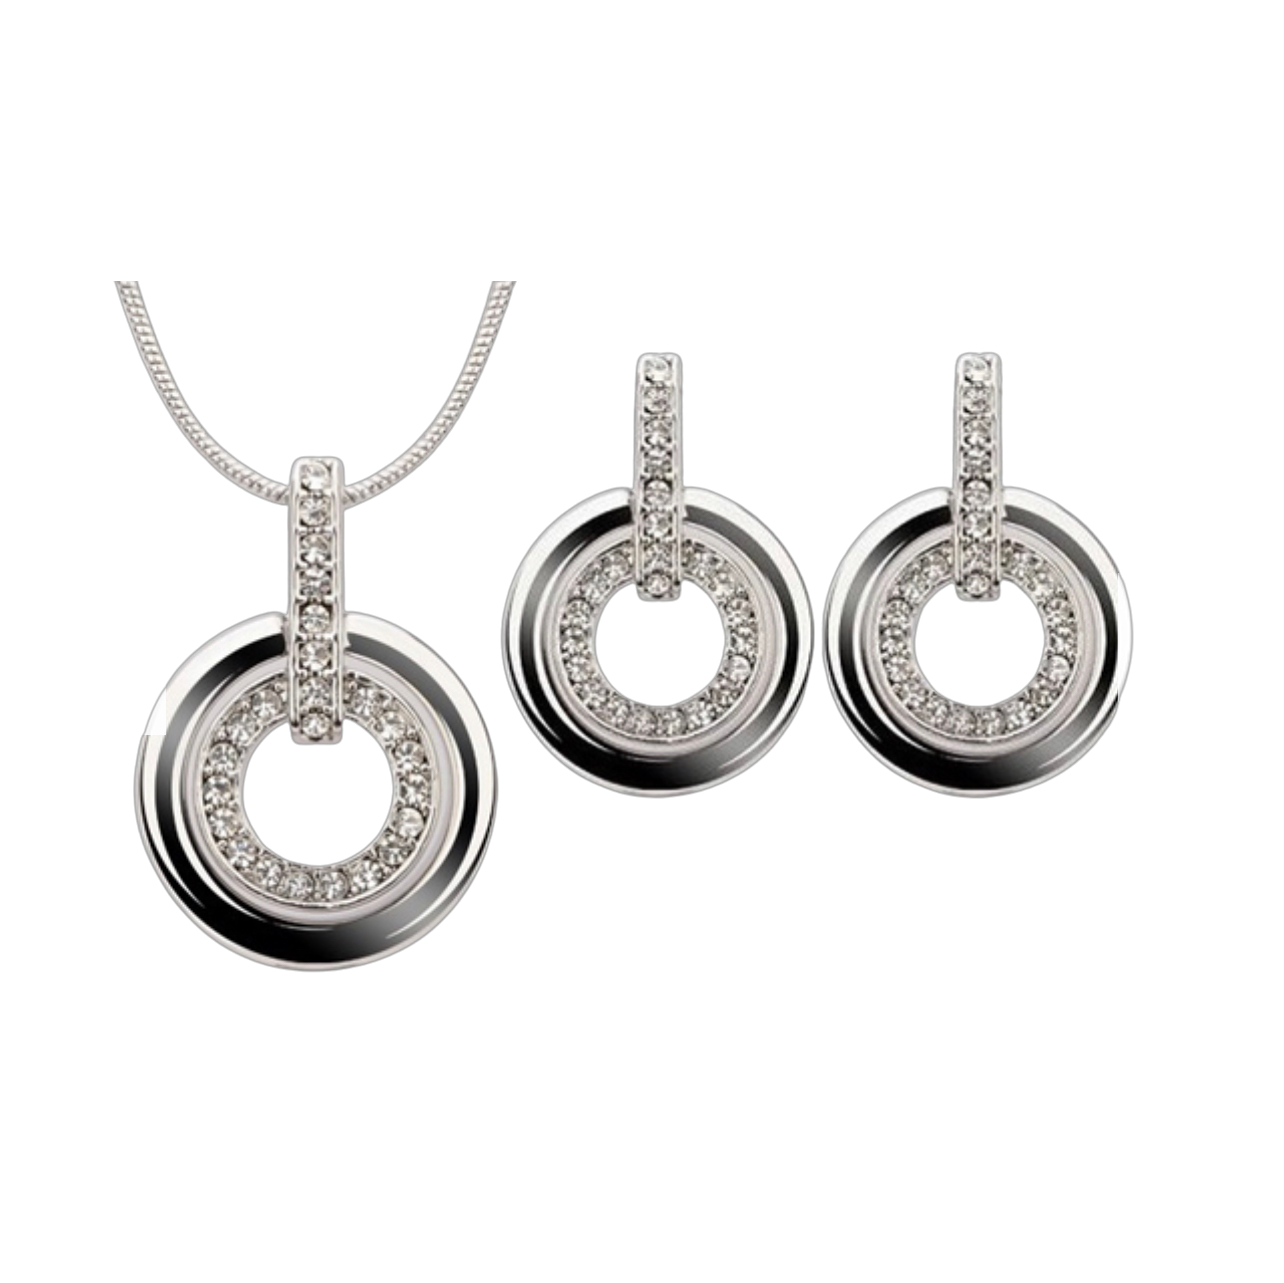 Black Jewel Necklace & Earring Set | Statement Jewellery | FREE Gift Box